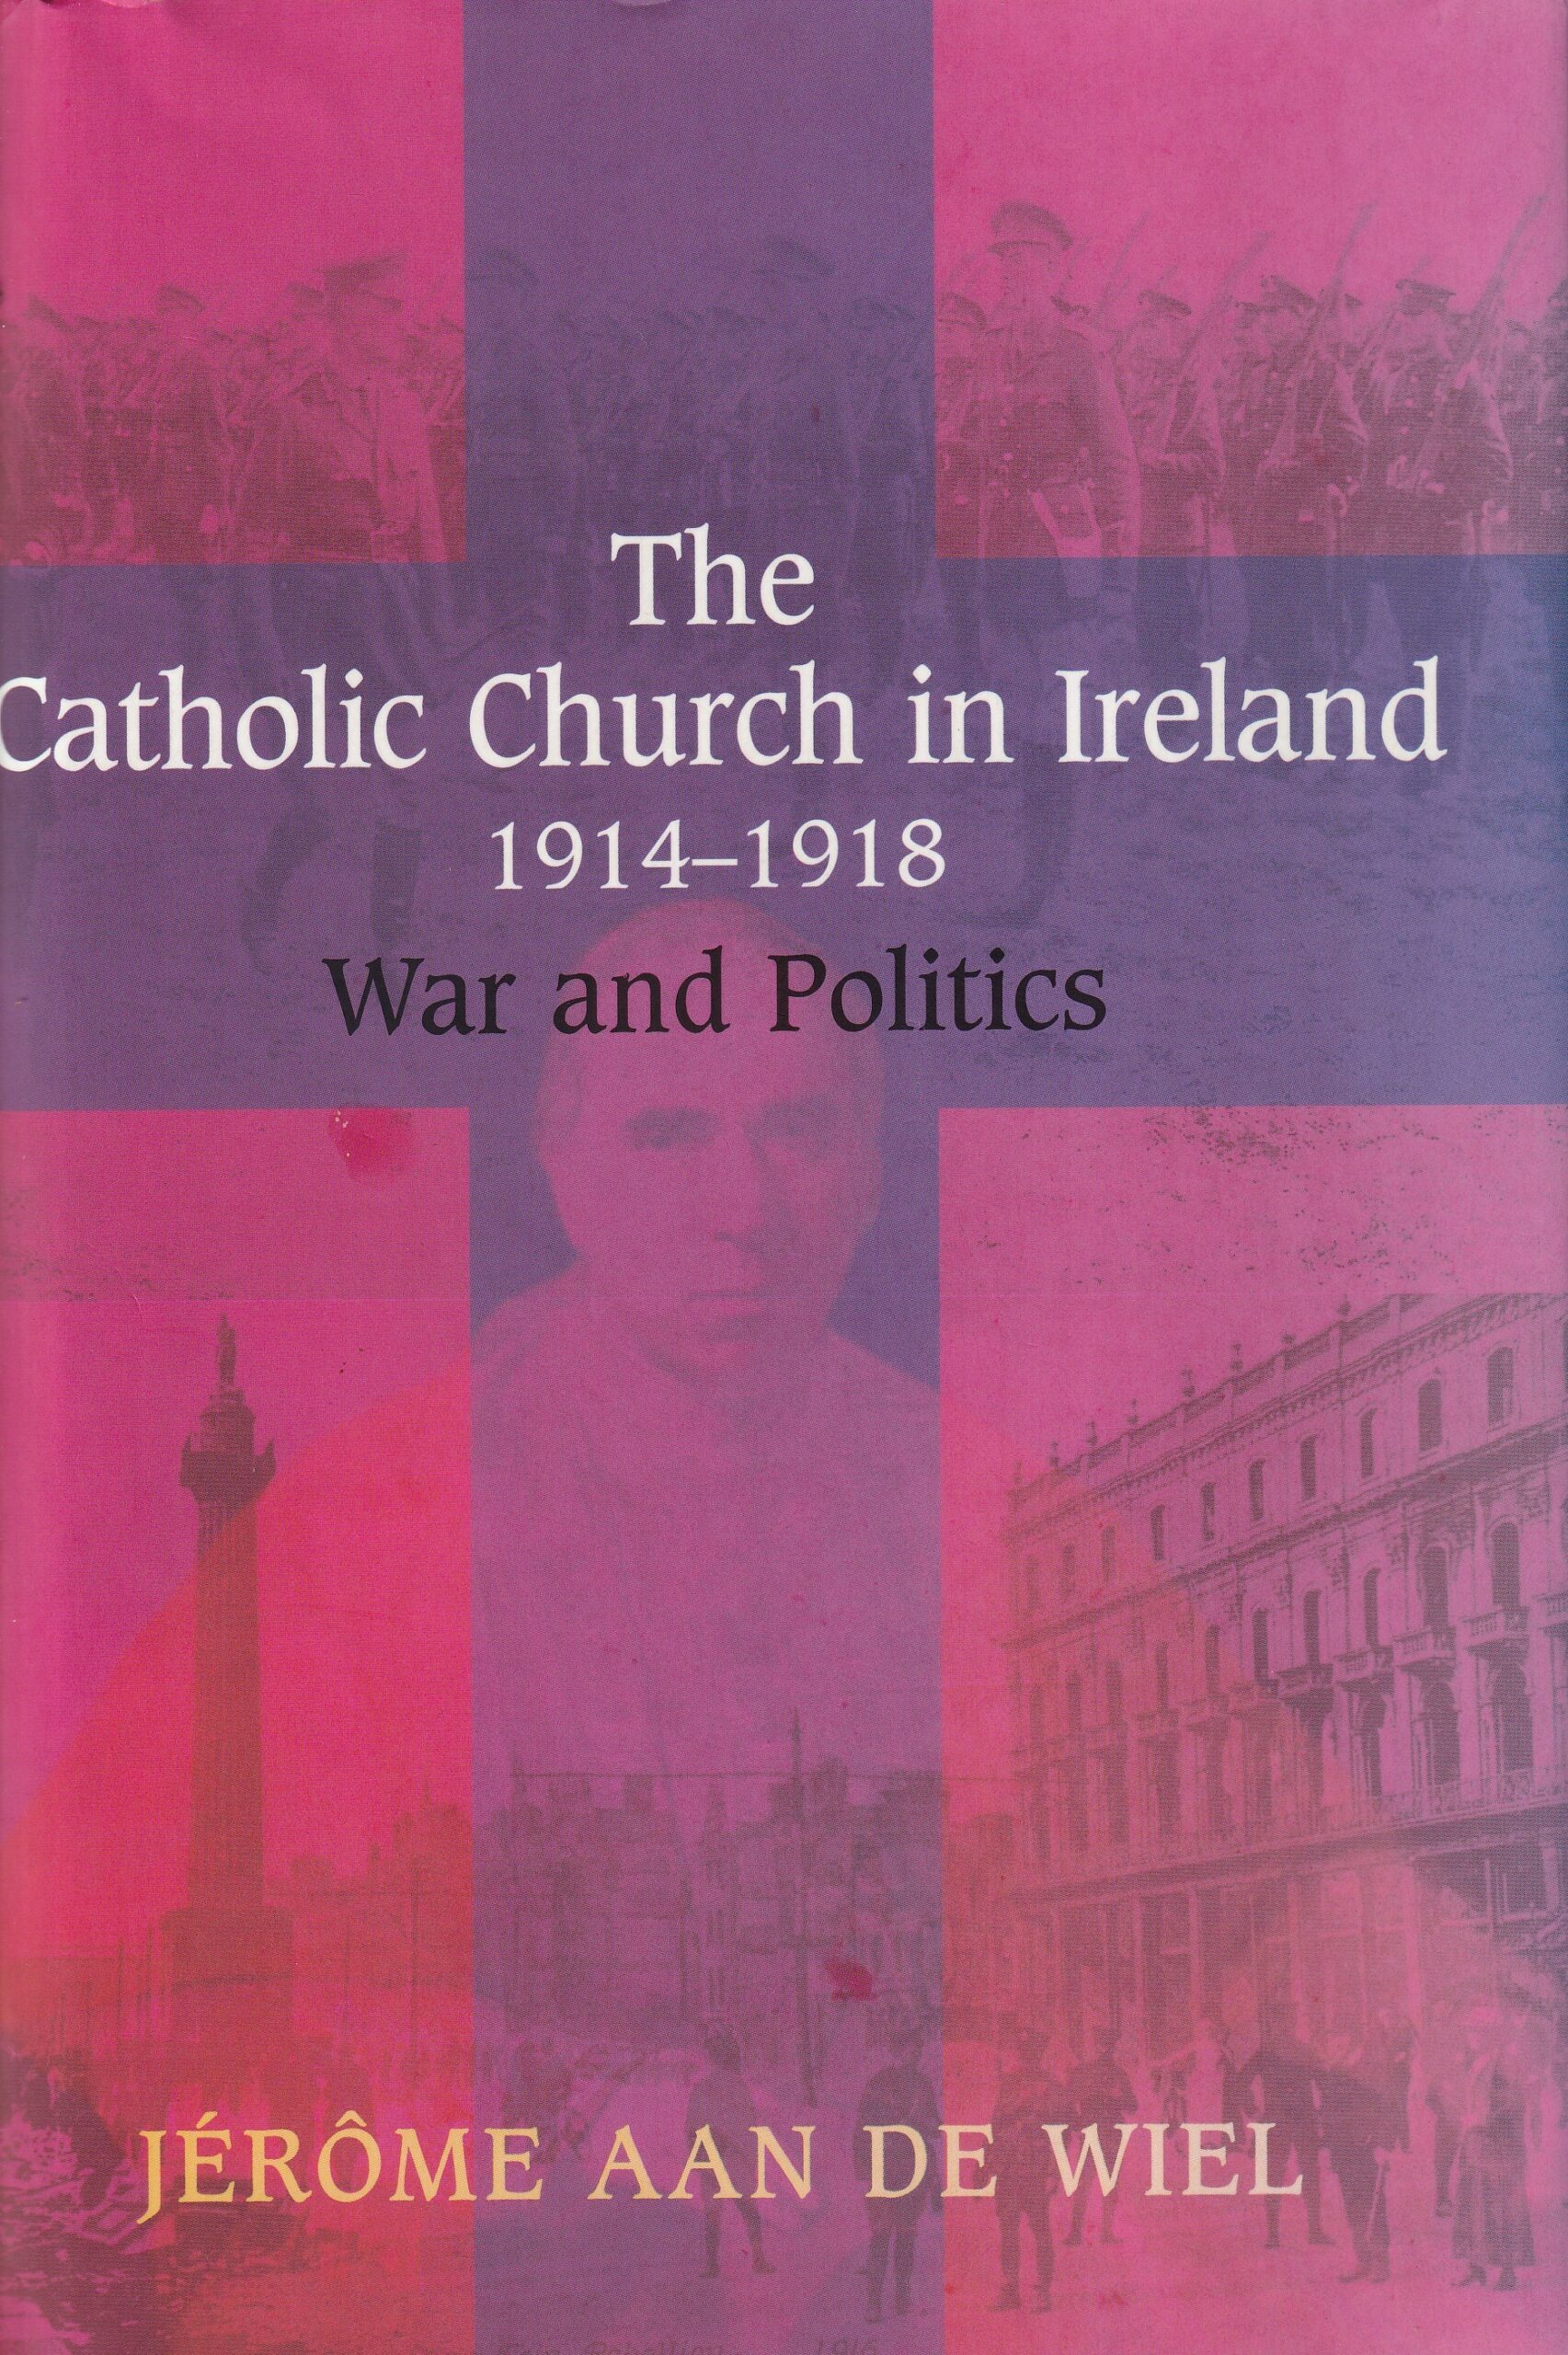 The Catholic Church in Ireland, 1914-1918: War and Politics | Jérôme aan De Wiel | Charlie Byrne's